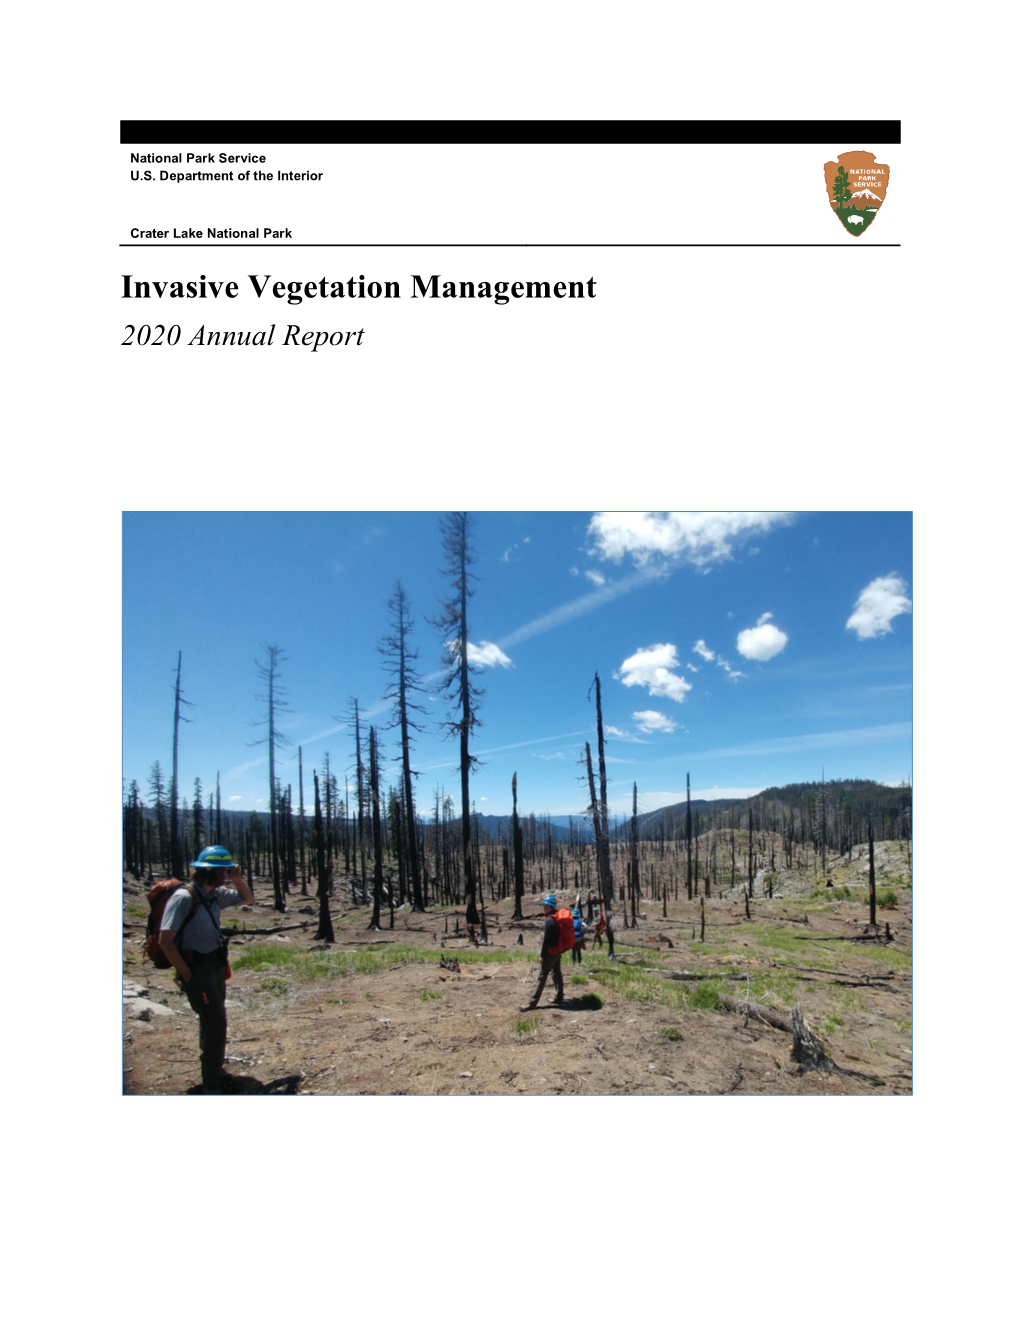 Invasive Vegetation Management: 2020 Annual Report, Crater Lake